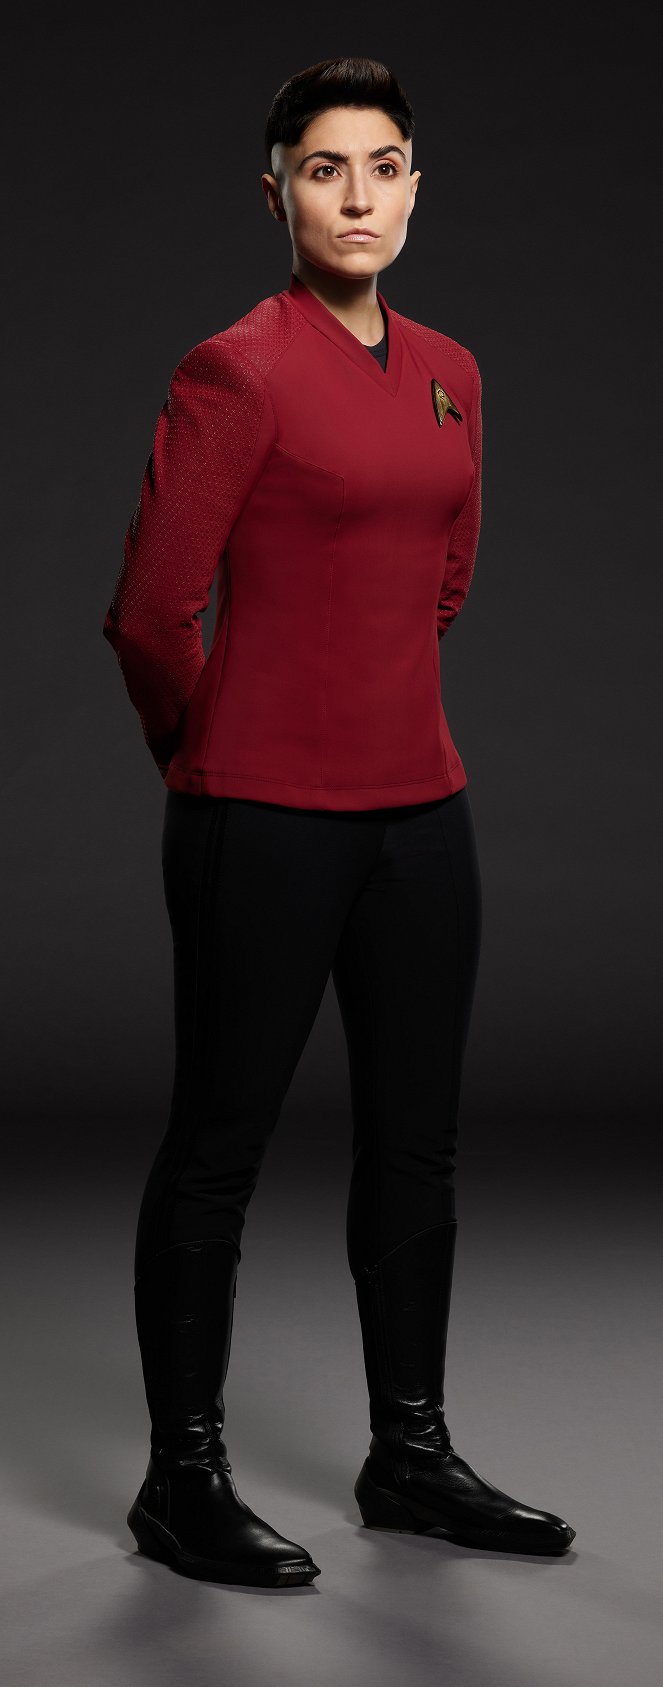 Star Trek: Strange New Worlds - Season 1 - Promo - Melissa Navia